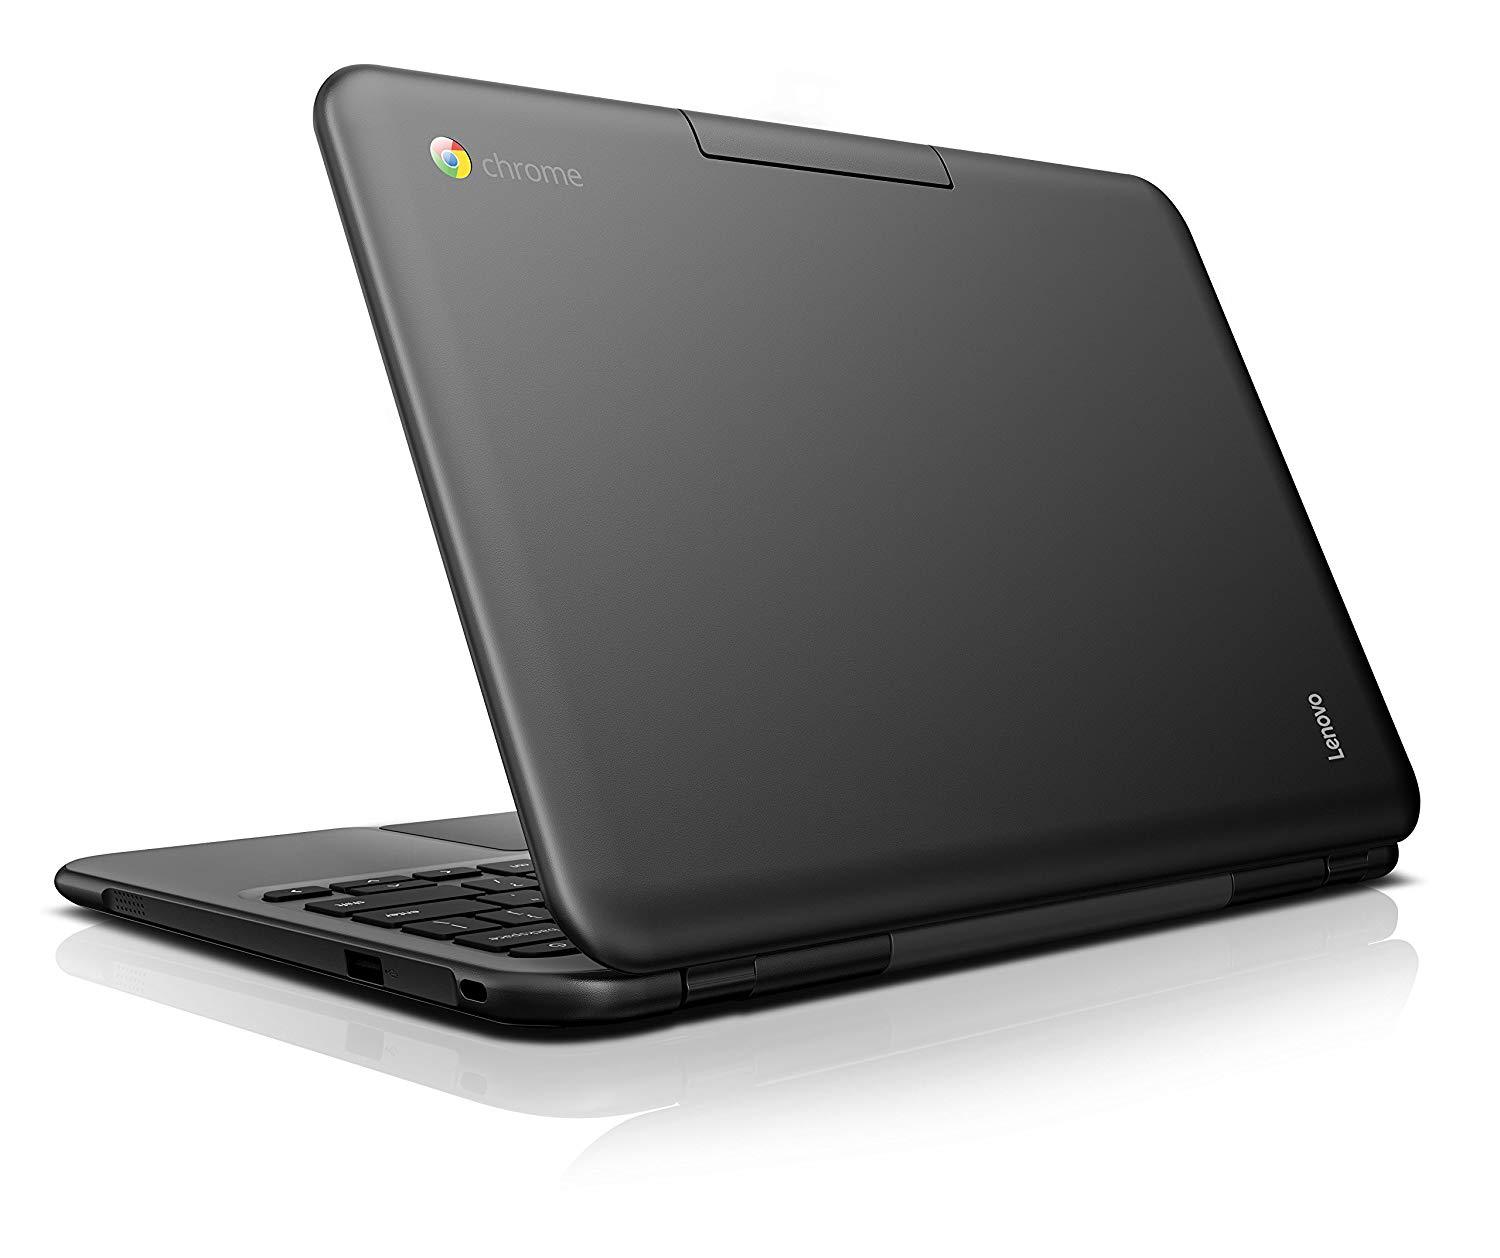 Restored Lenovo Chromebook N22 11.6" Laptop, Intel Celeron N3050, 4GB RAM, 16GB HD, Chrome OS, Black (Refurbished) - image 3 of 5